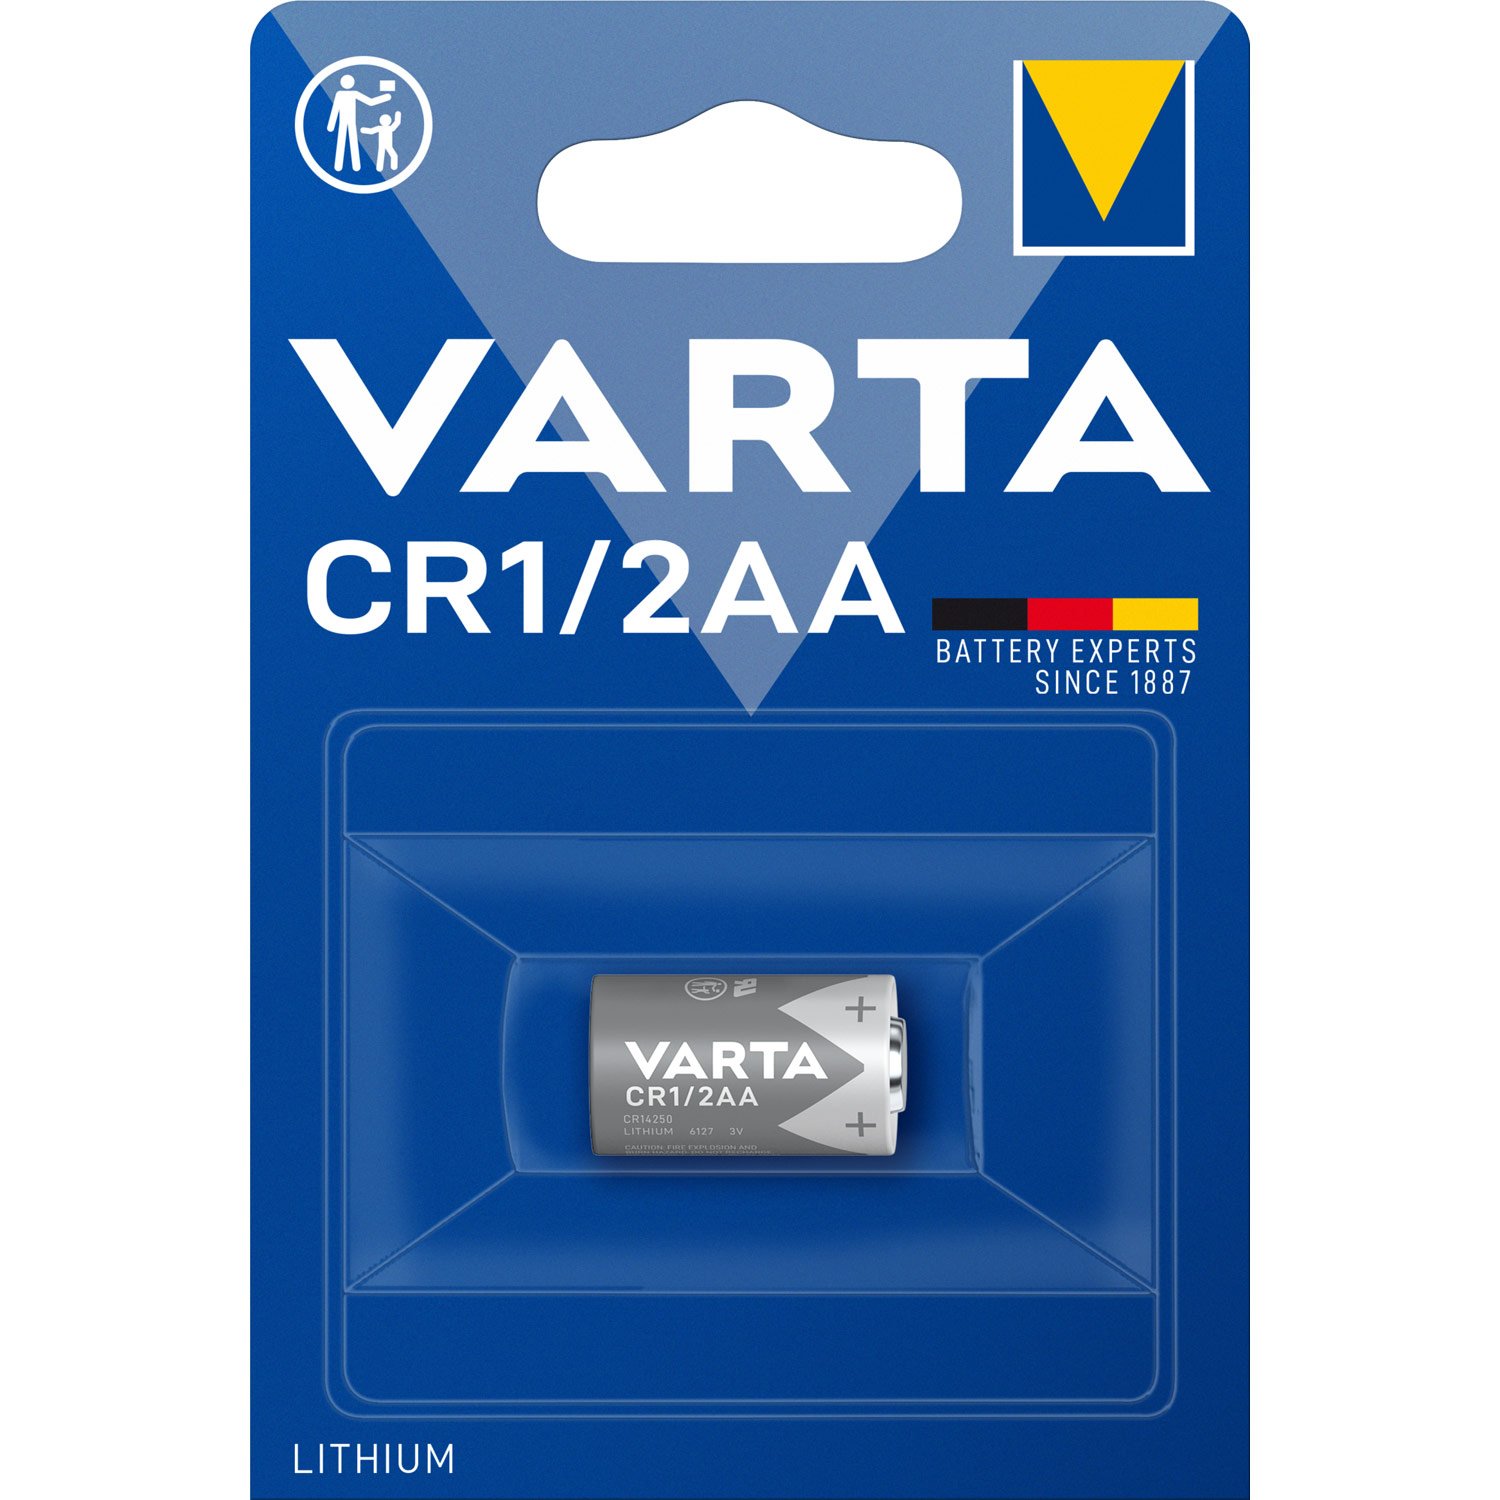 Varta CR1/2AA / 1/2AA 3V Lithium-batteri